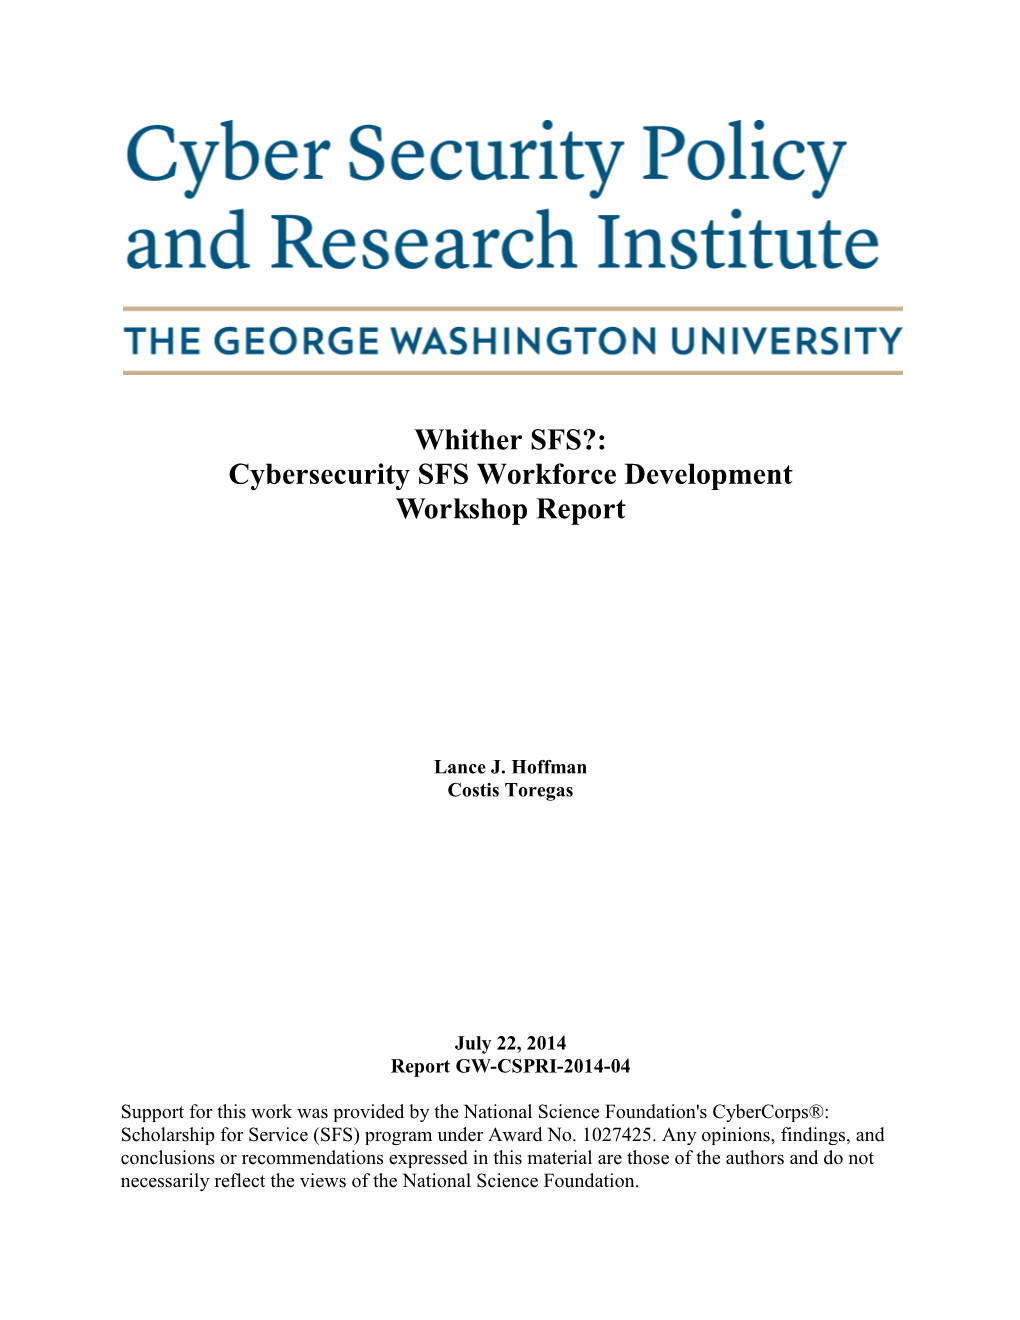 Cybersecurity SFS Workforce Development Workshop Report